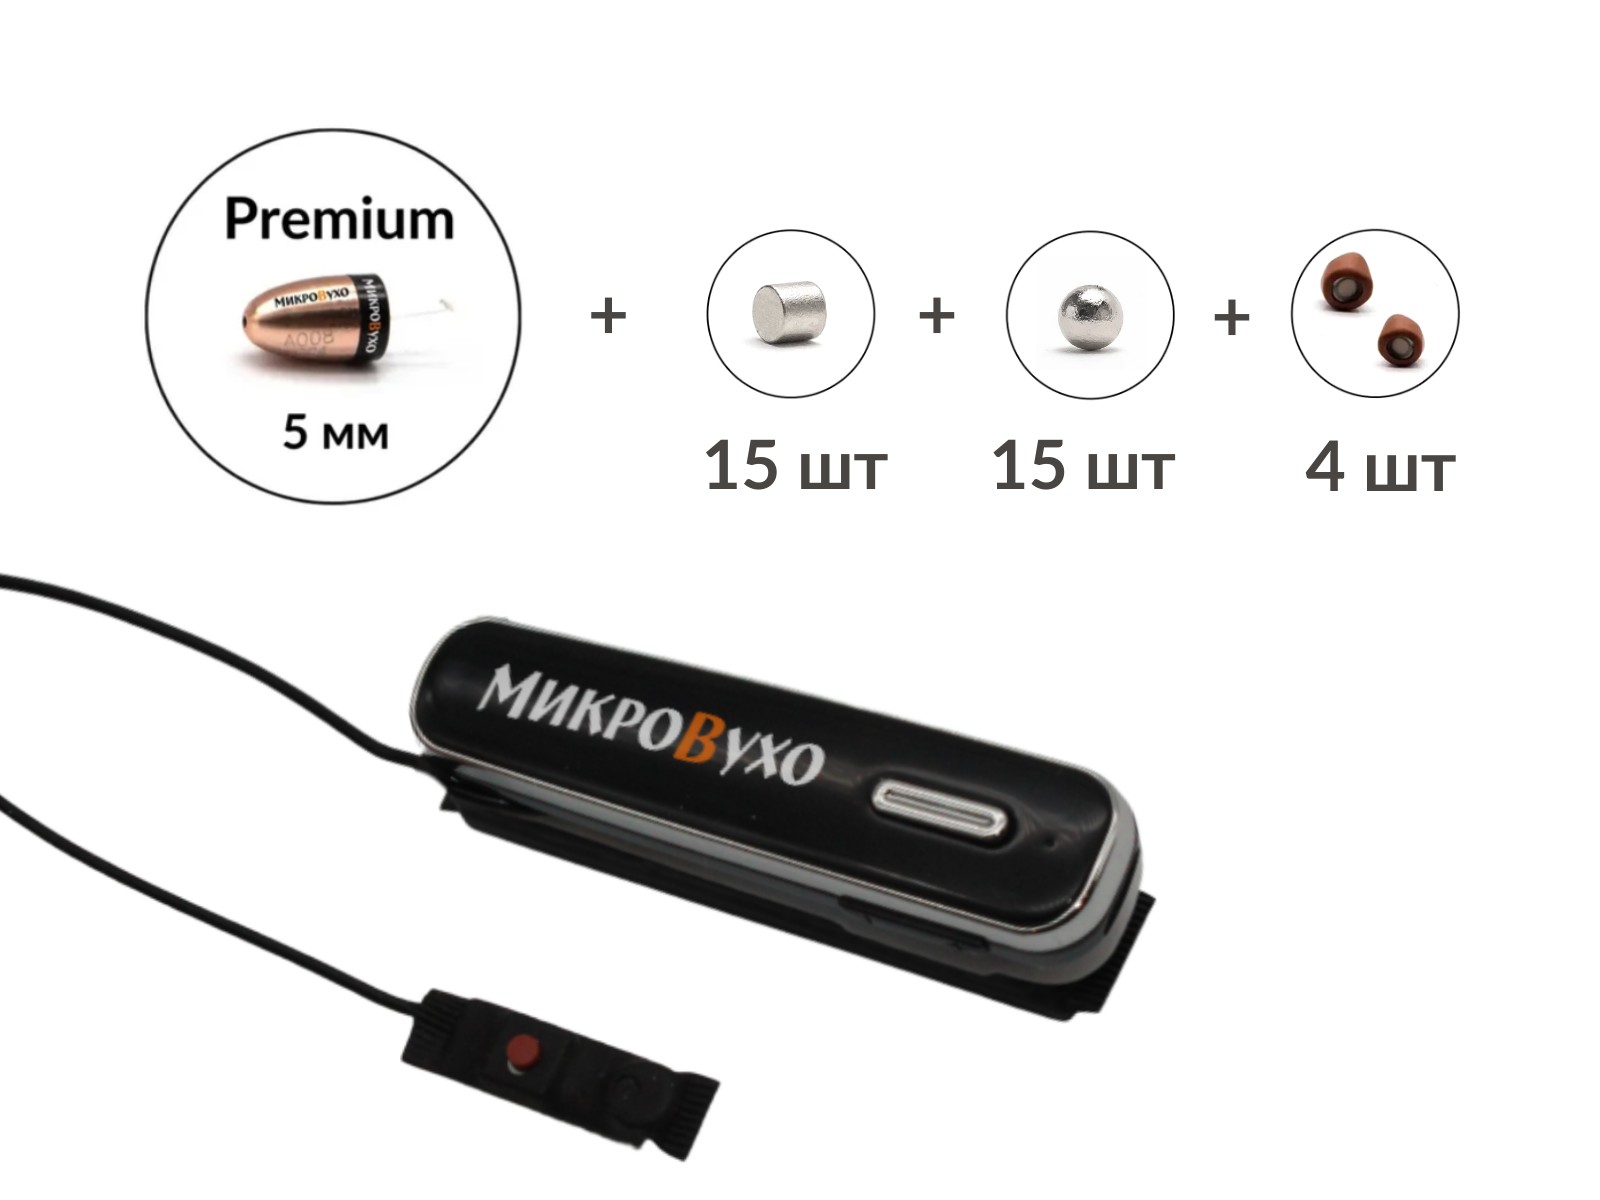 Bluetooth Box Premier Lite Plus с кнопкой-пищалкой, капсулой Premium и магнитами 2 мм - изображение 4